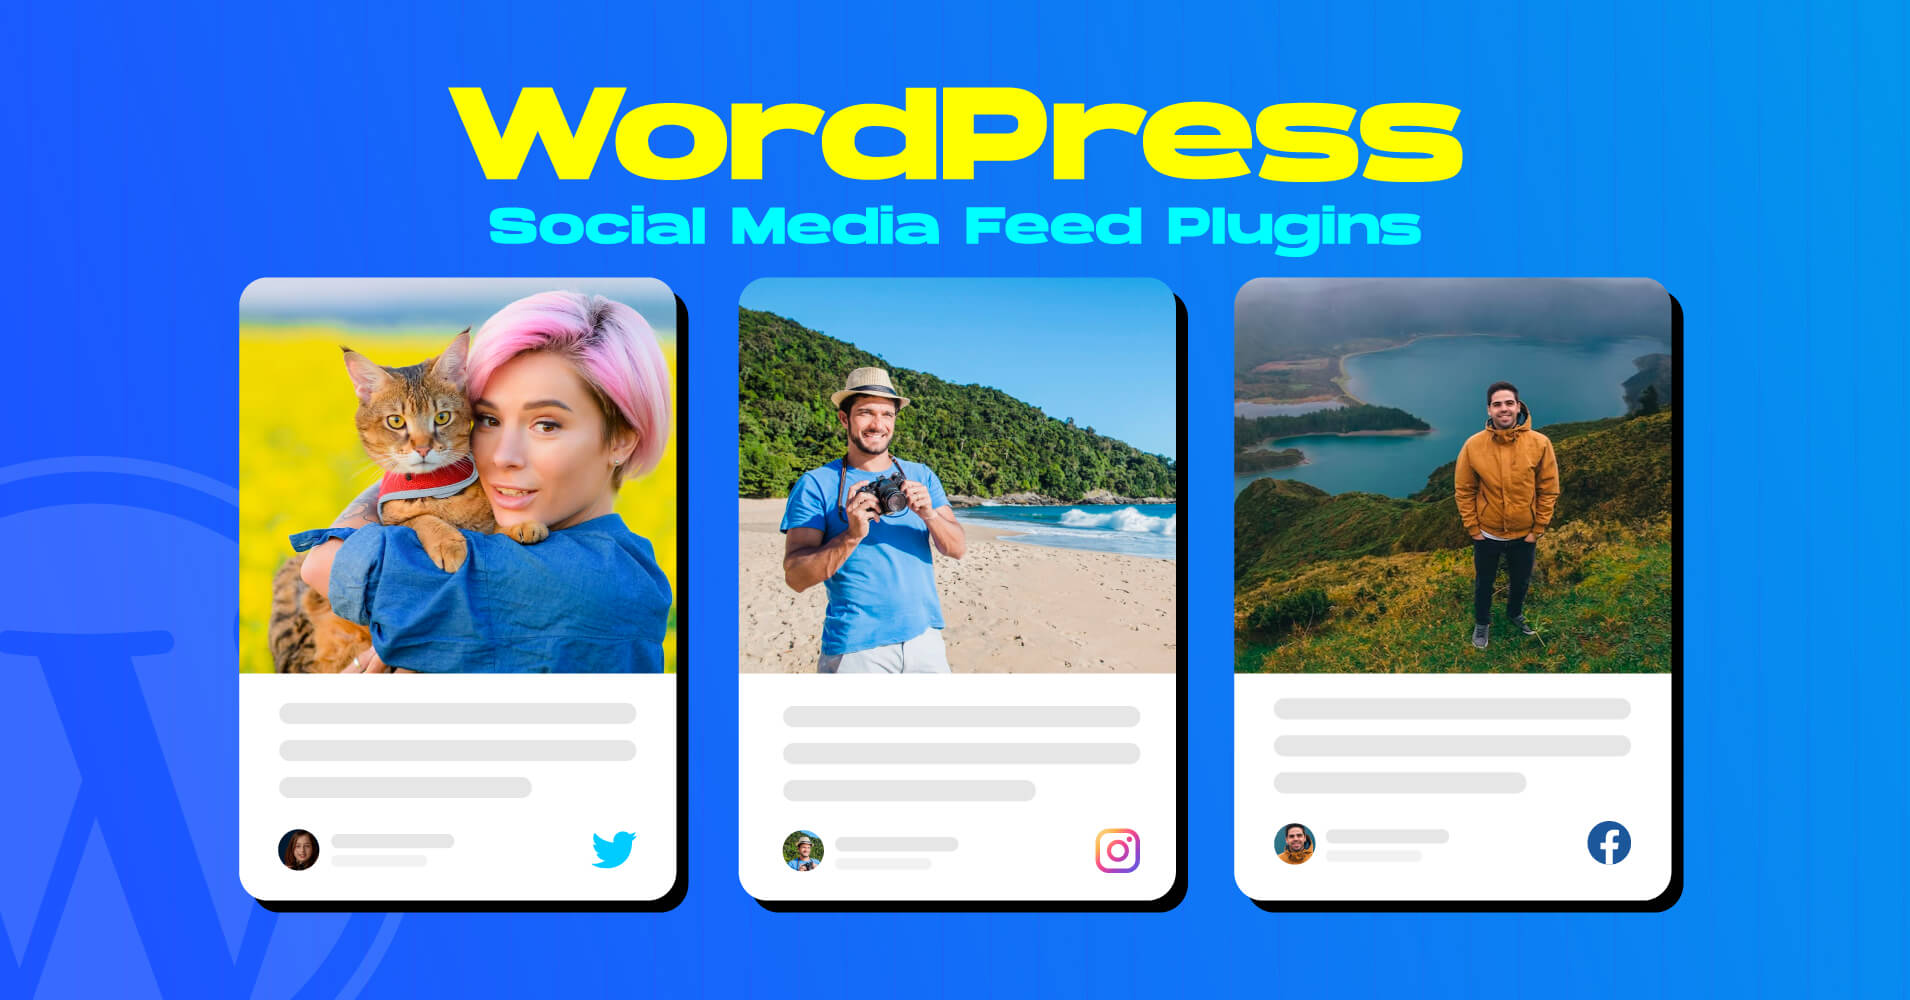 WordPress Social Media Feed Plugin